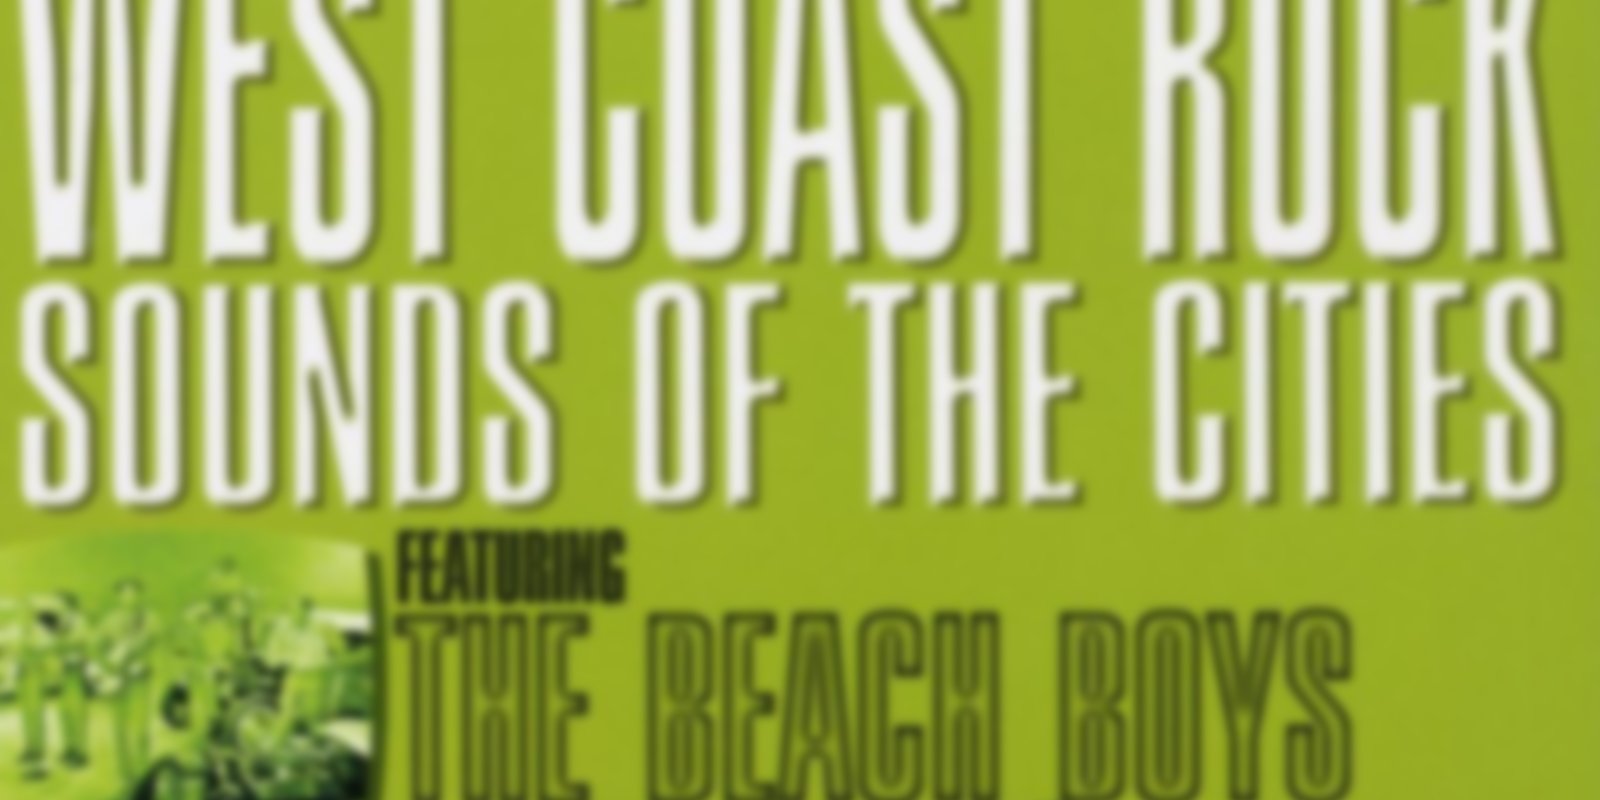 Ed Sullivan's Rock'n'Roll Classics - West Coast Rock / Sounds of the Cities